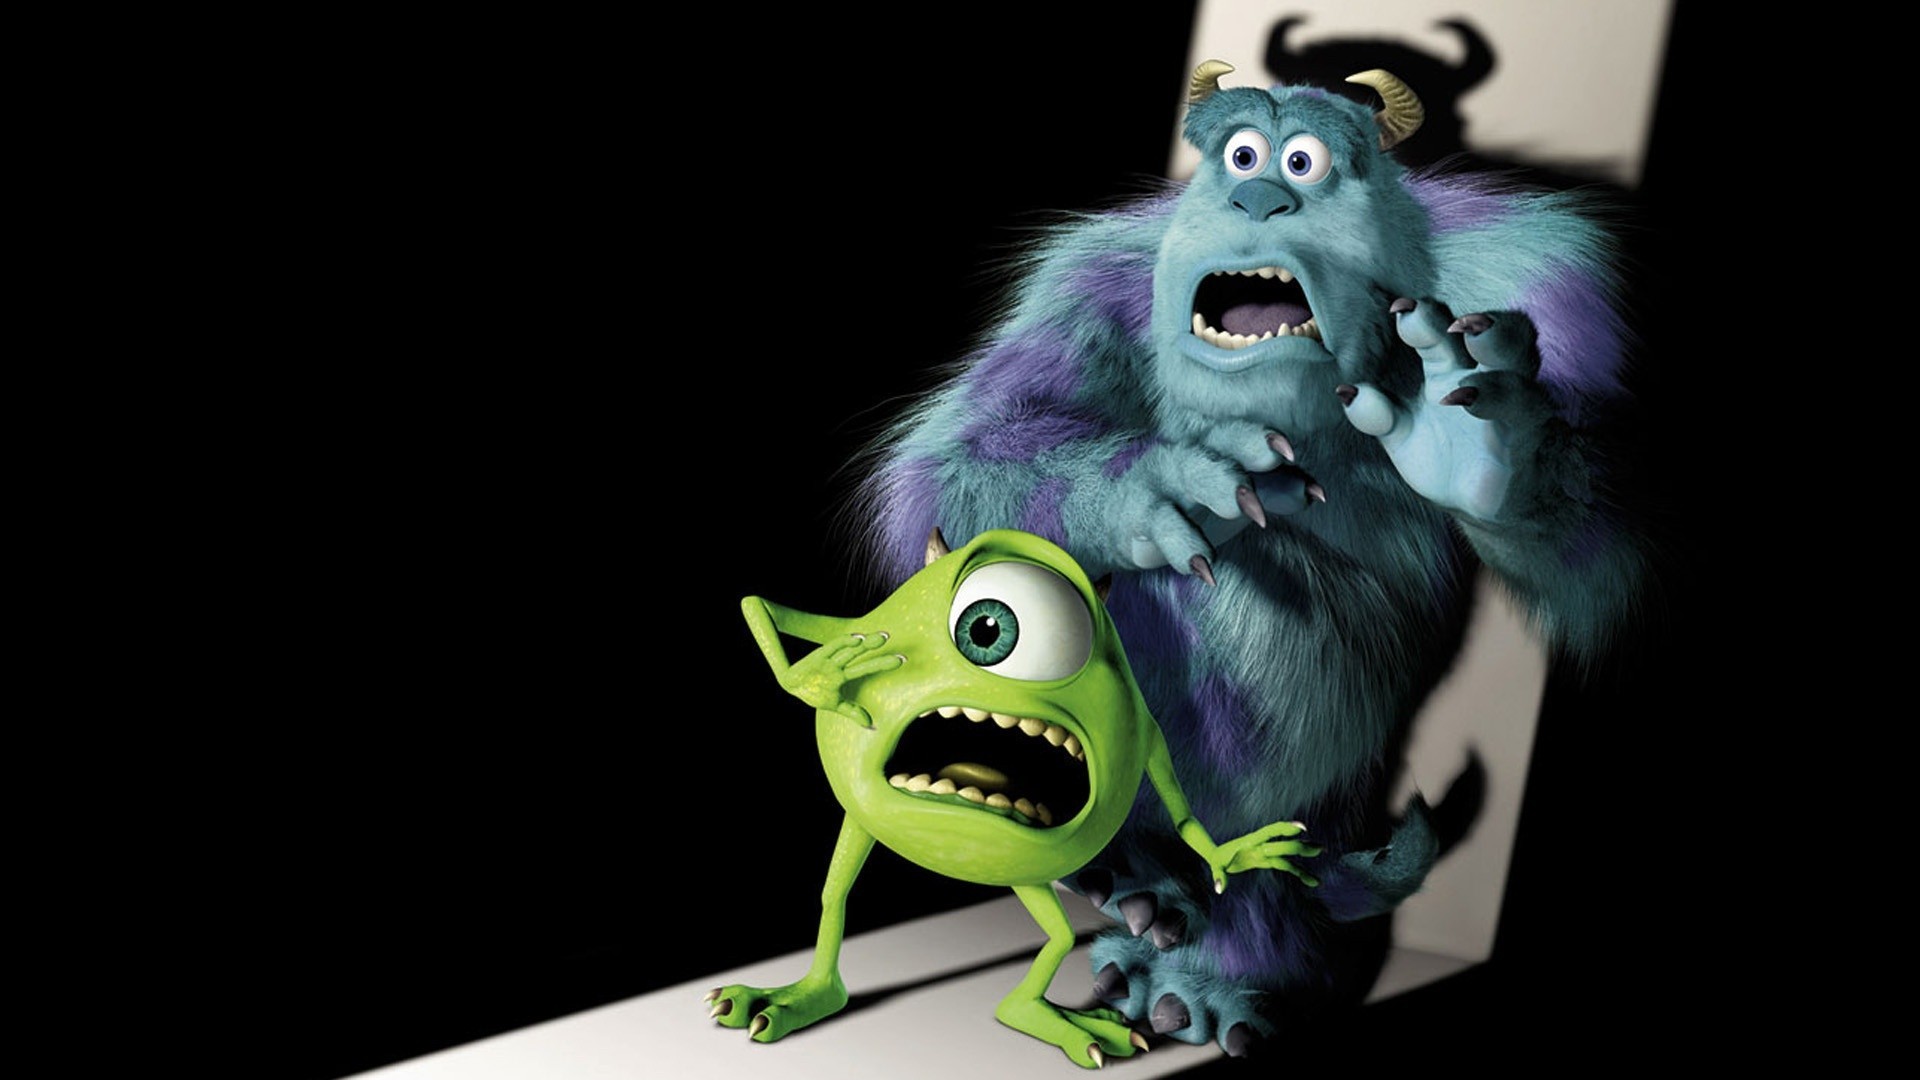 General 1920x1080 Monsters, Inc. movies animated movies Pixar Animation Studios